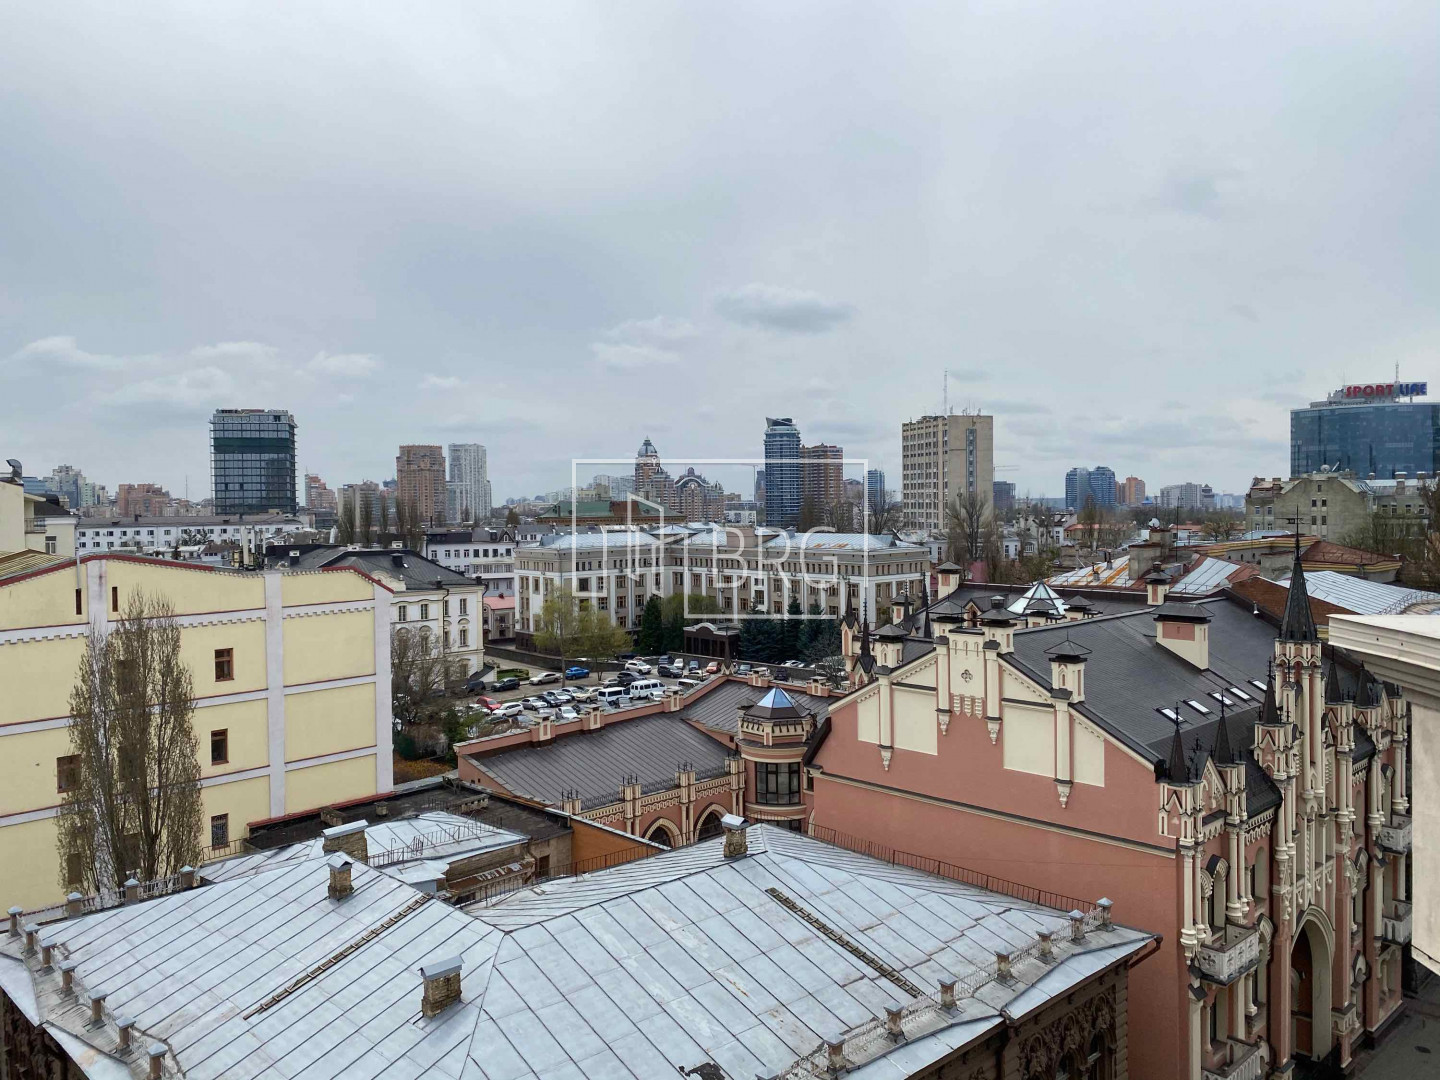 Аренда квартиры 4 комнаты с видом на город Печерск центр. Kiev